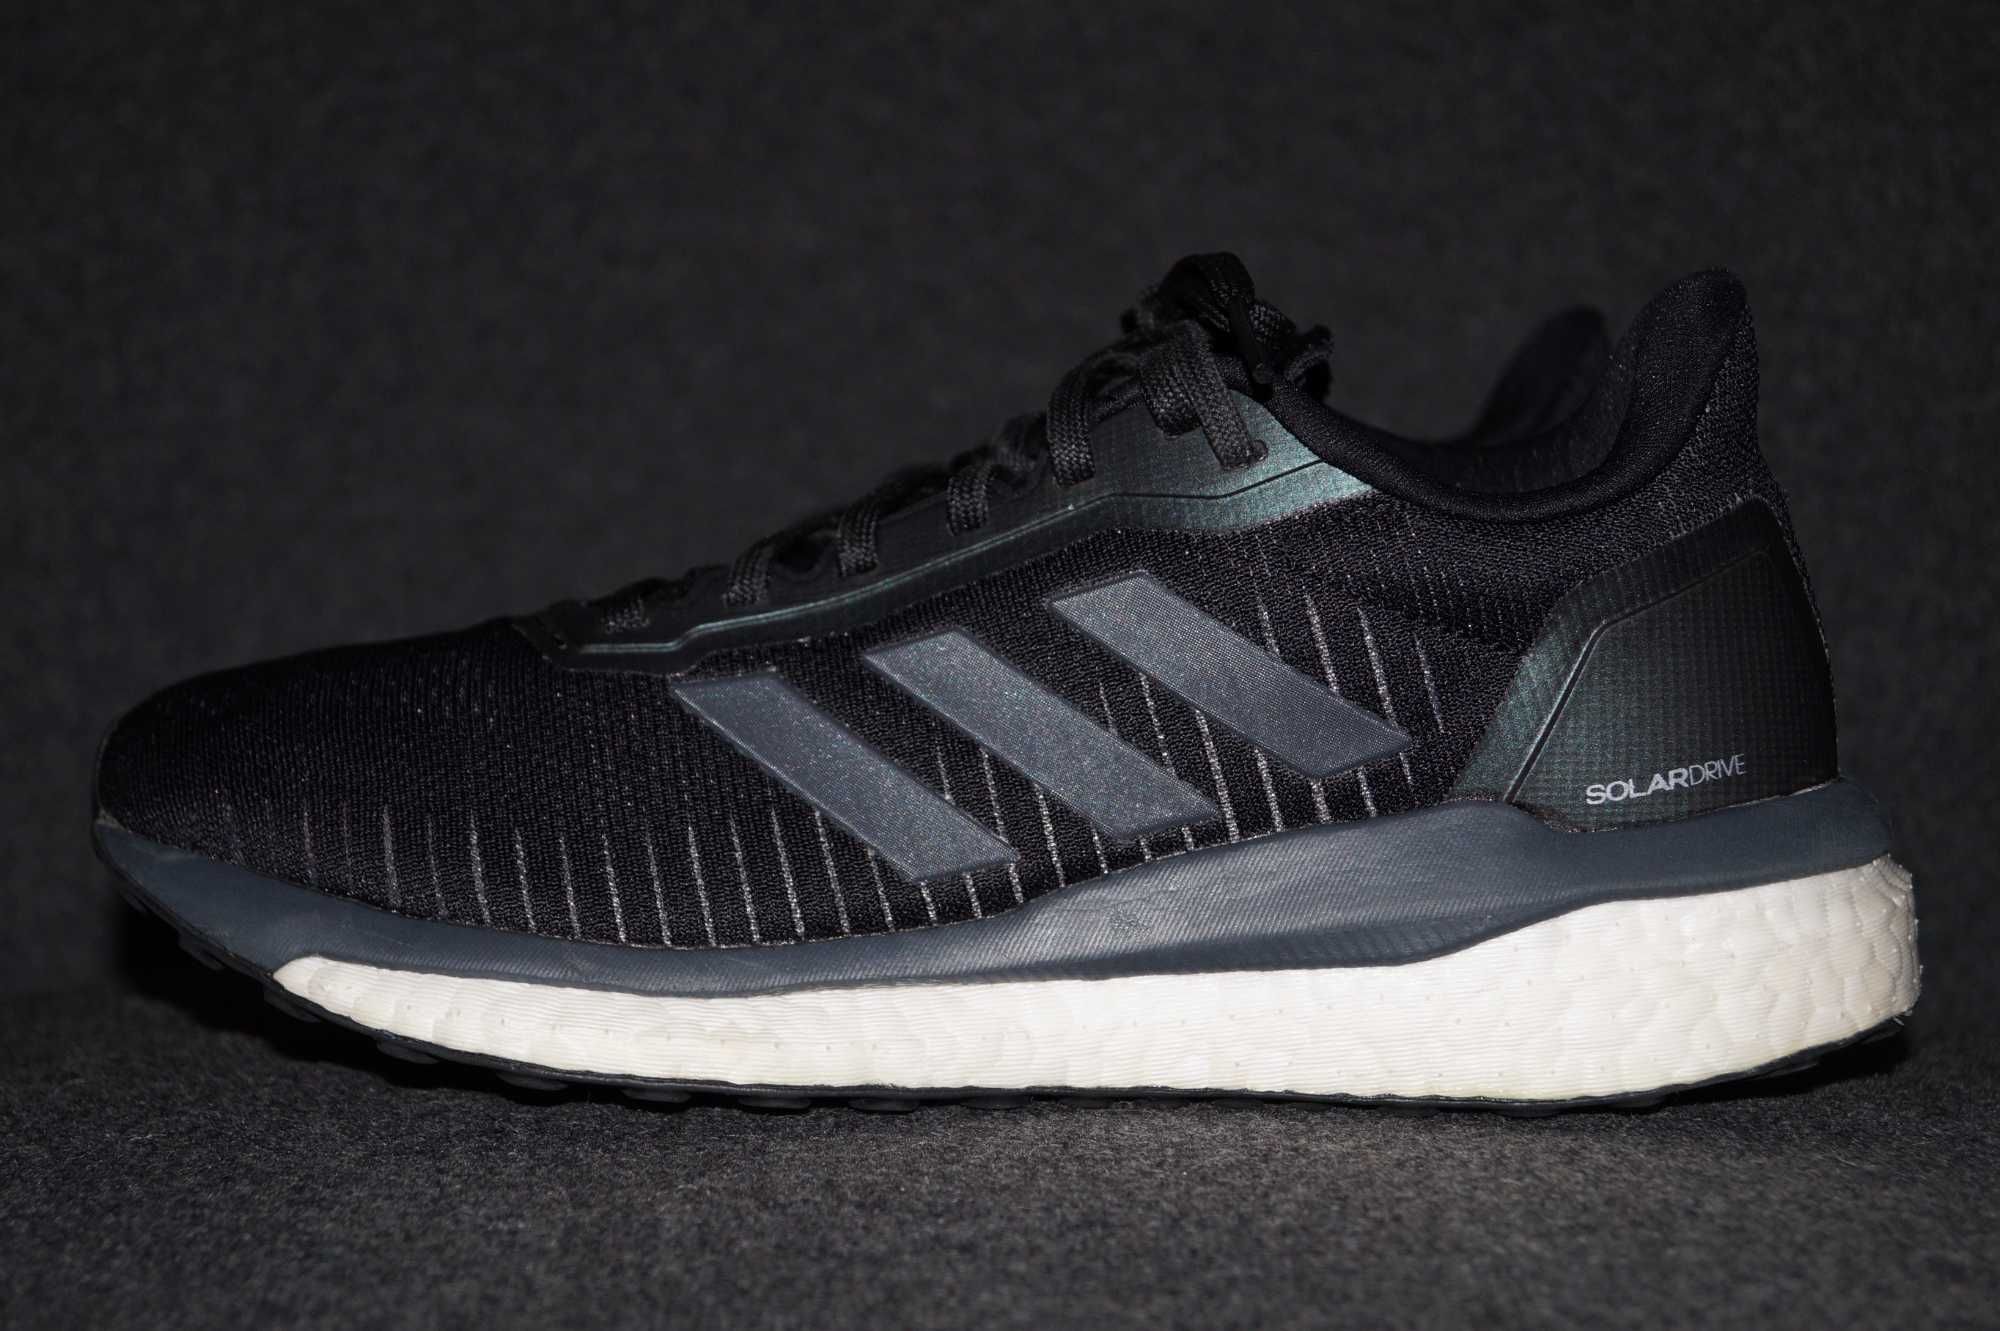 Damskie buty sportowe Adidas Boost Solardrive r. 38